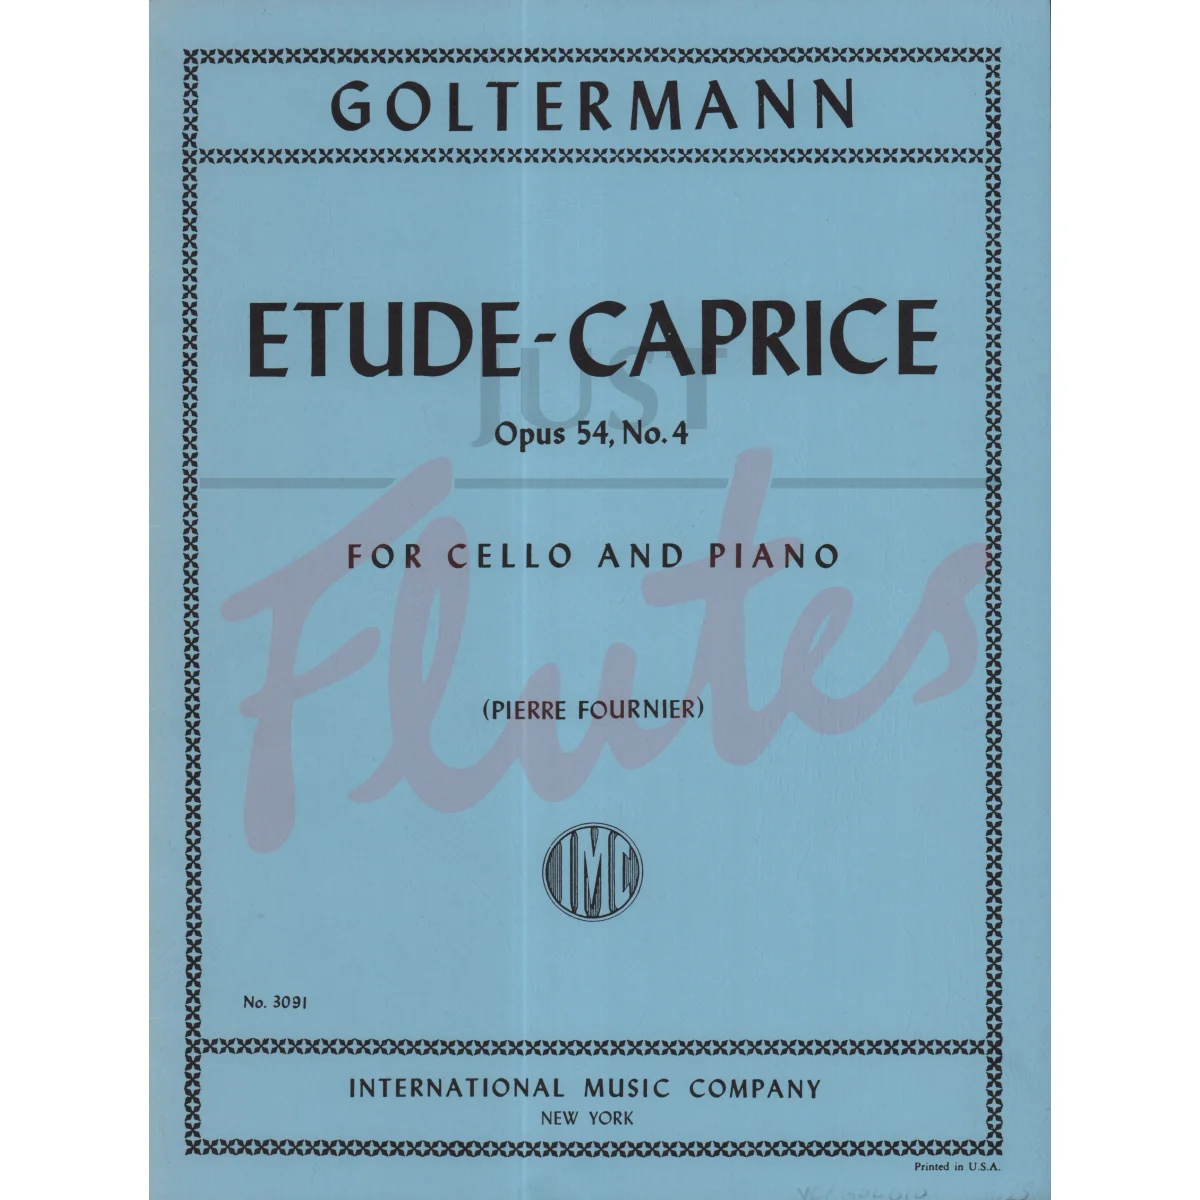 Etude-Caprice for Cello and Piano